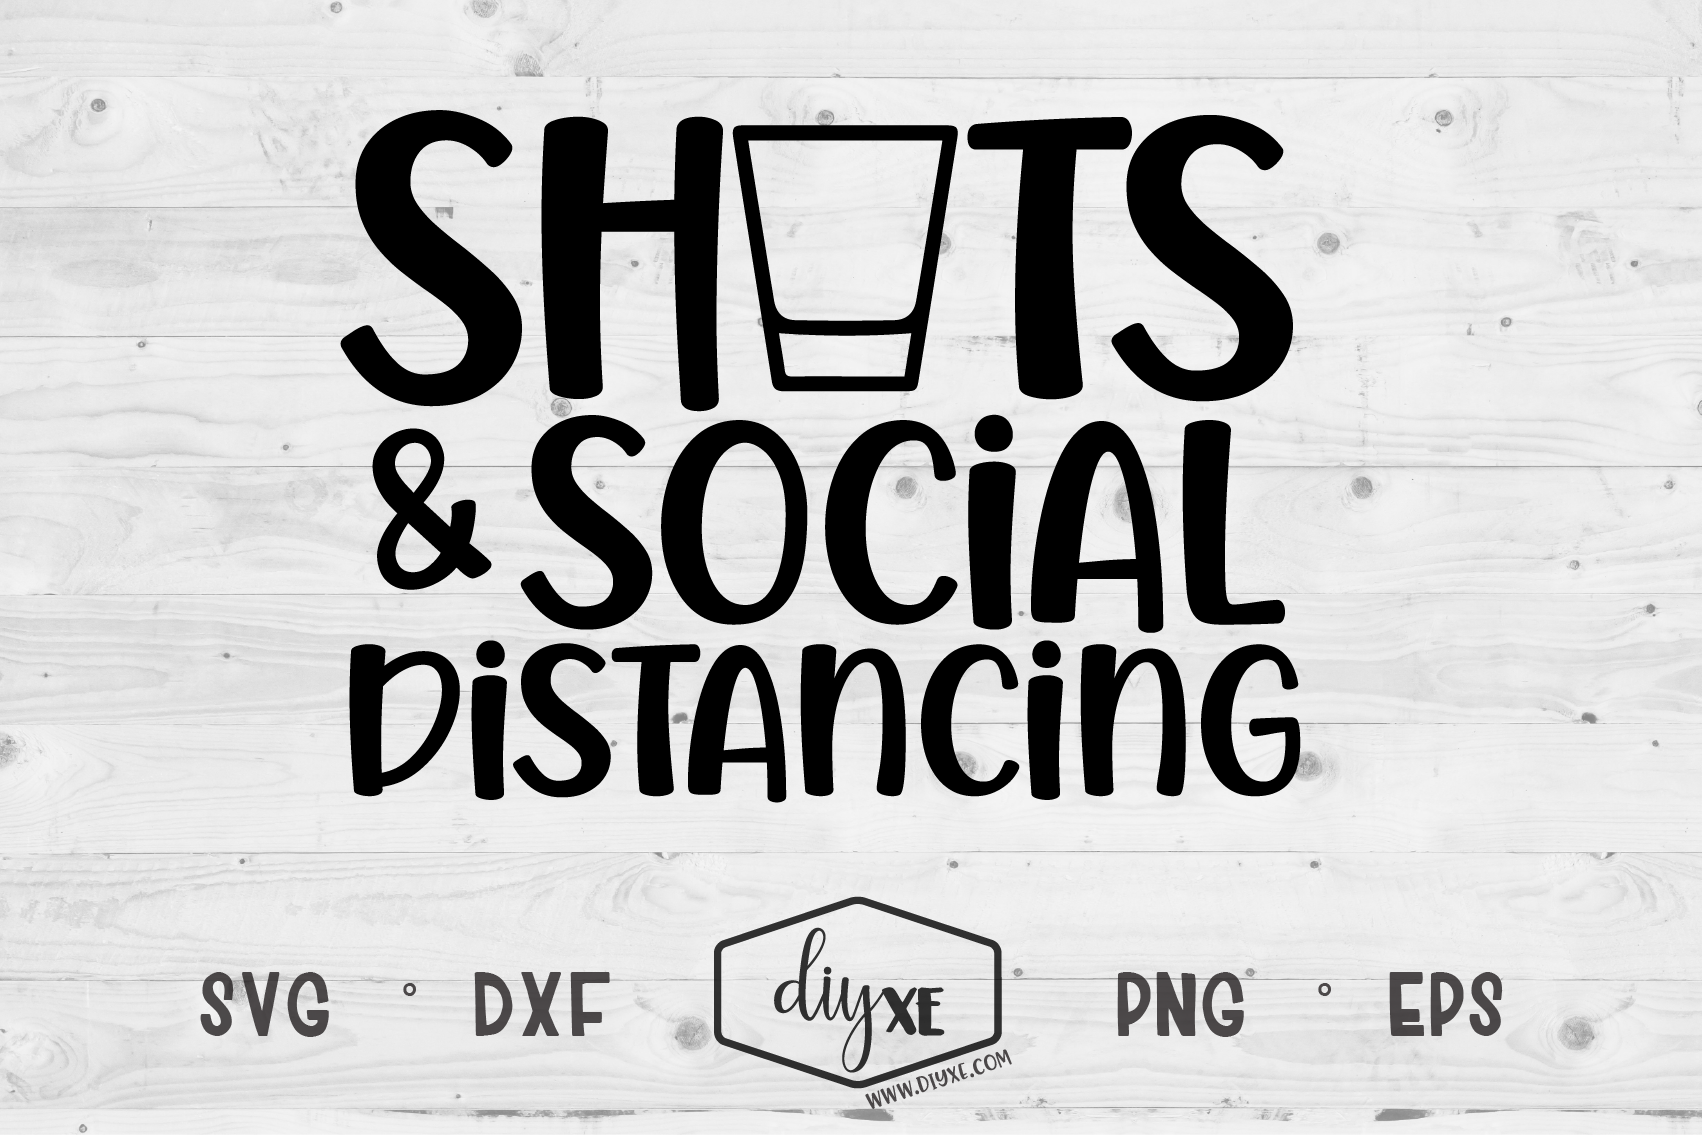 Shots Social Distancing A Quarantine Svg Cut File By Diyxe Thehungryjpeg Com